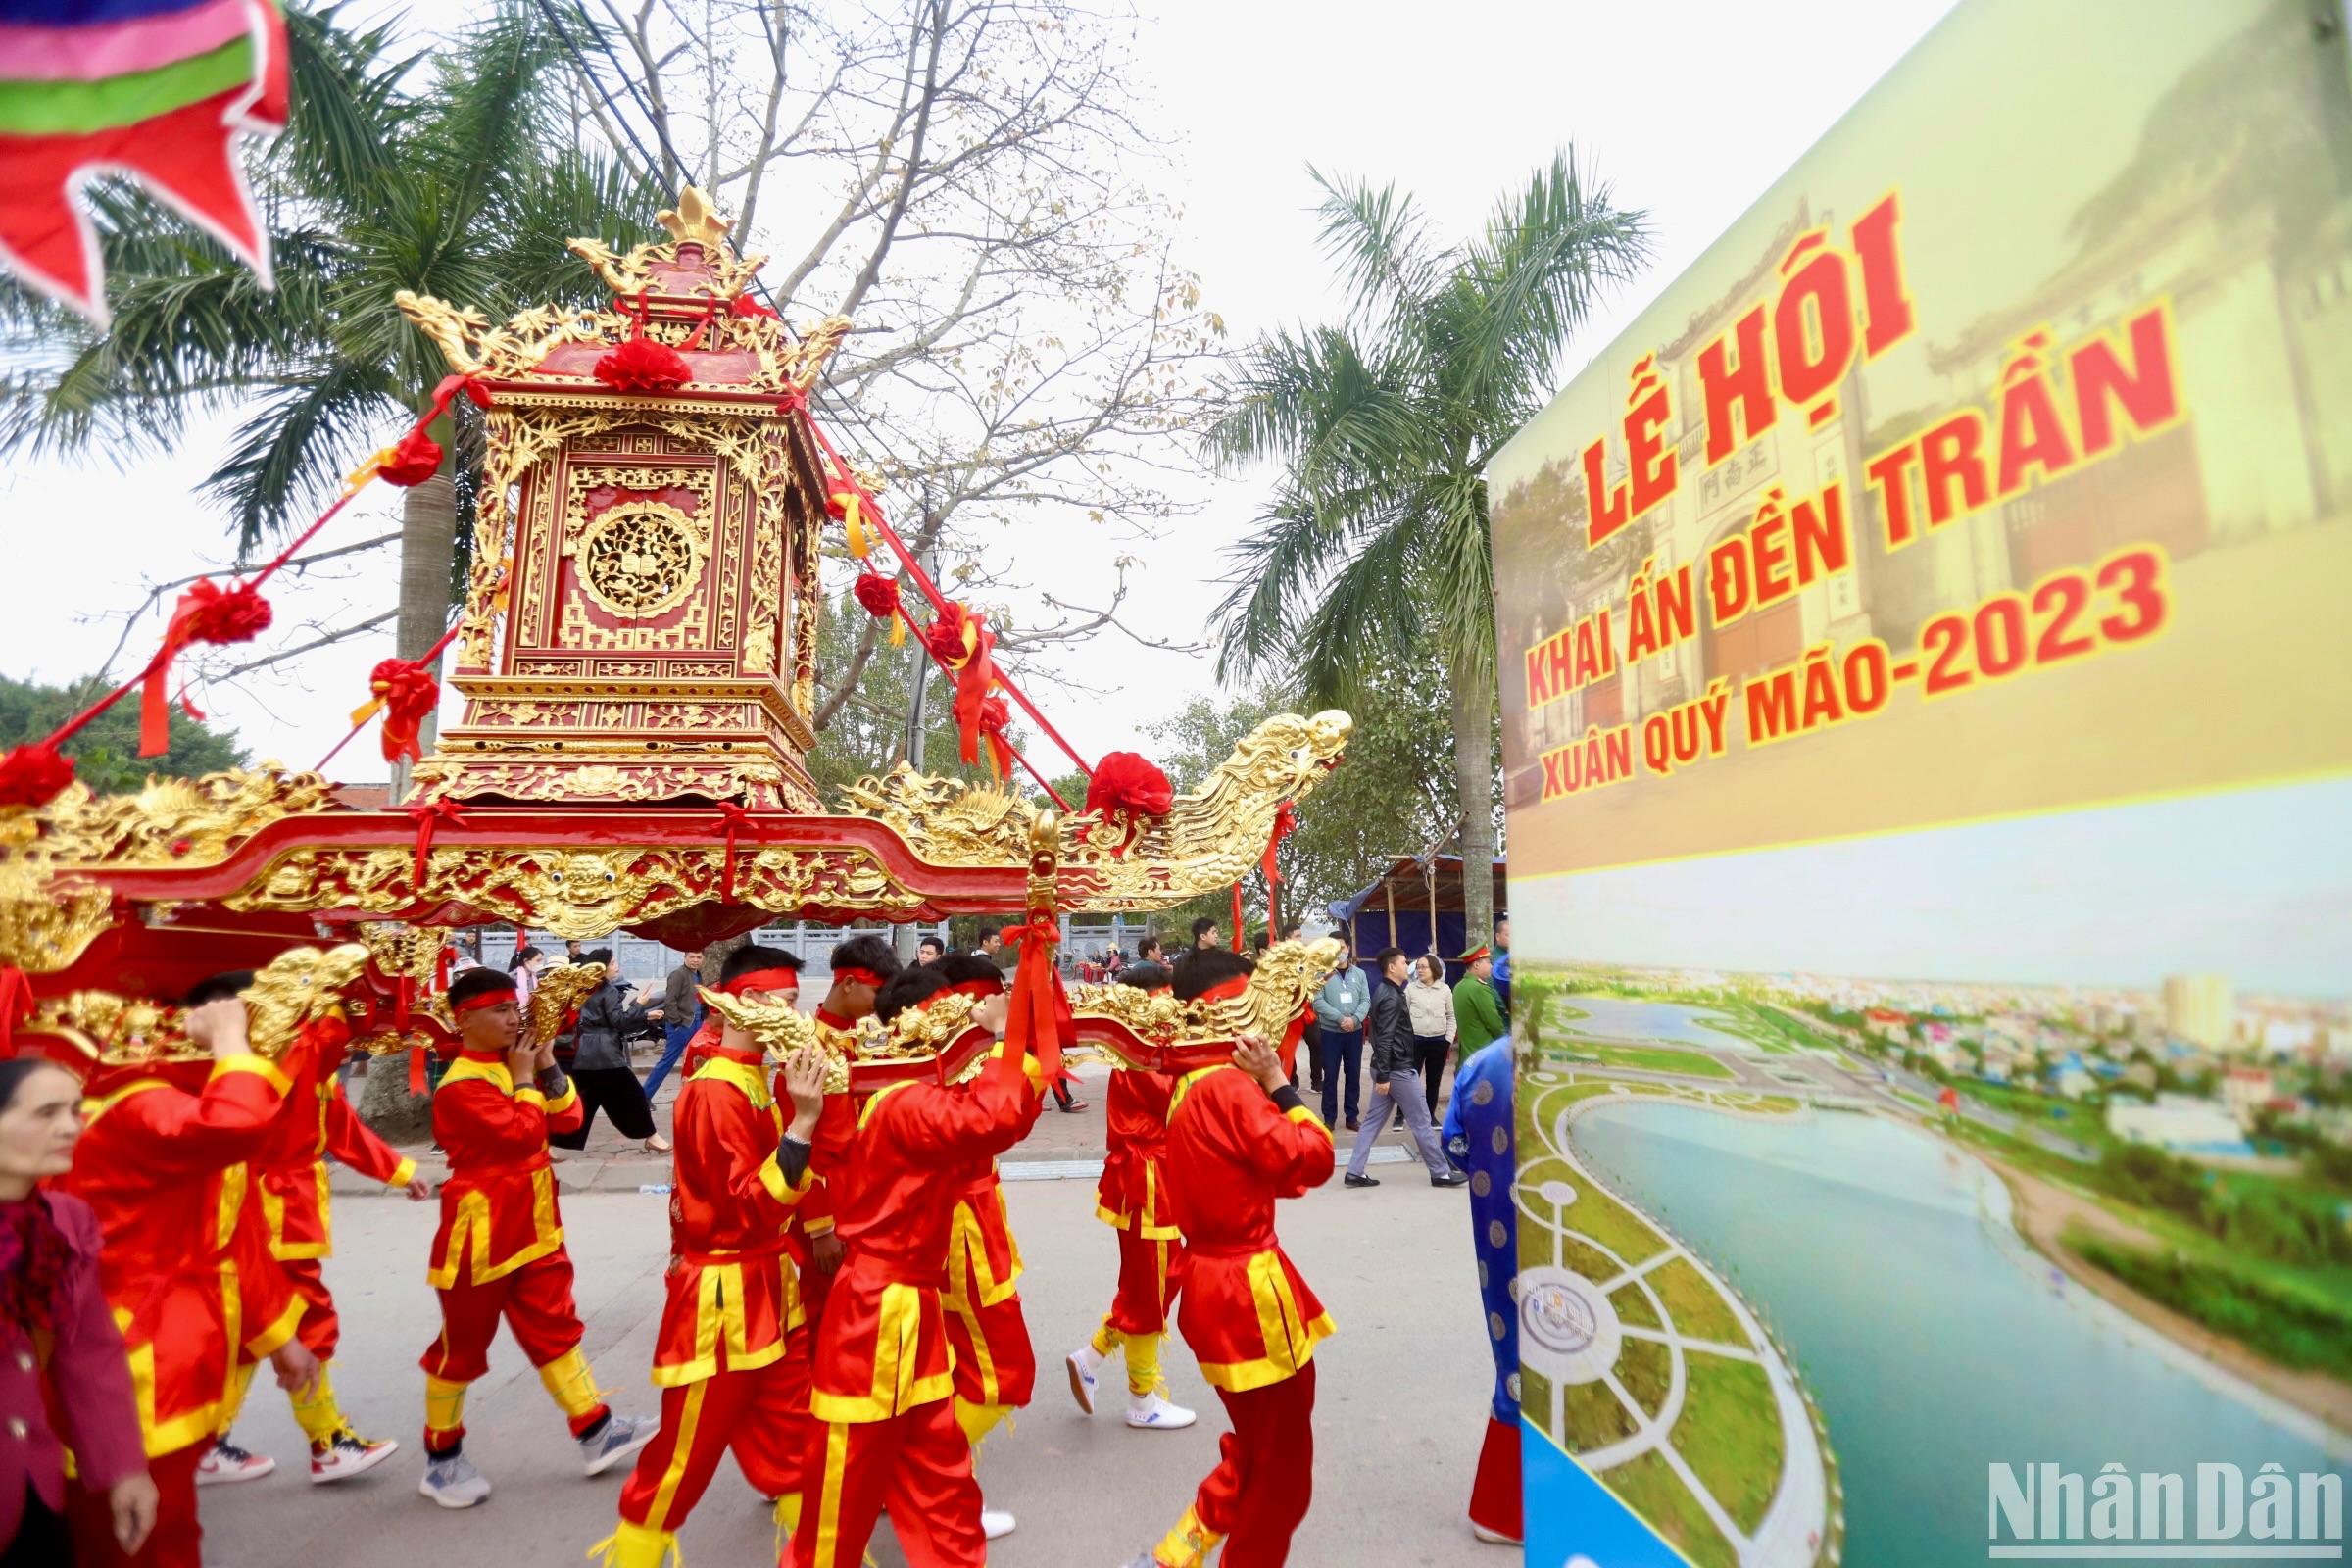 Preservan rituales culturales del Festival del Sello Real en el Templo Tran